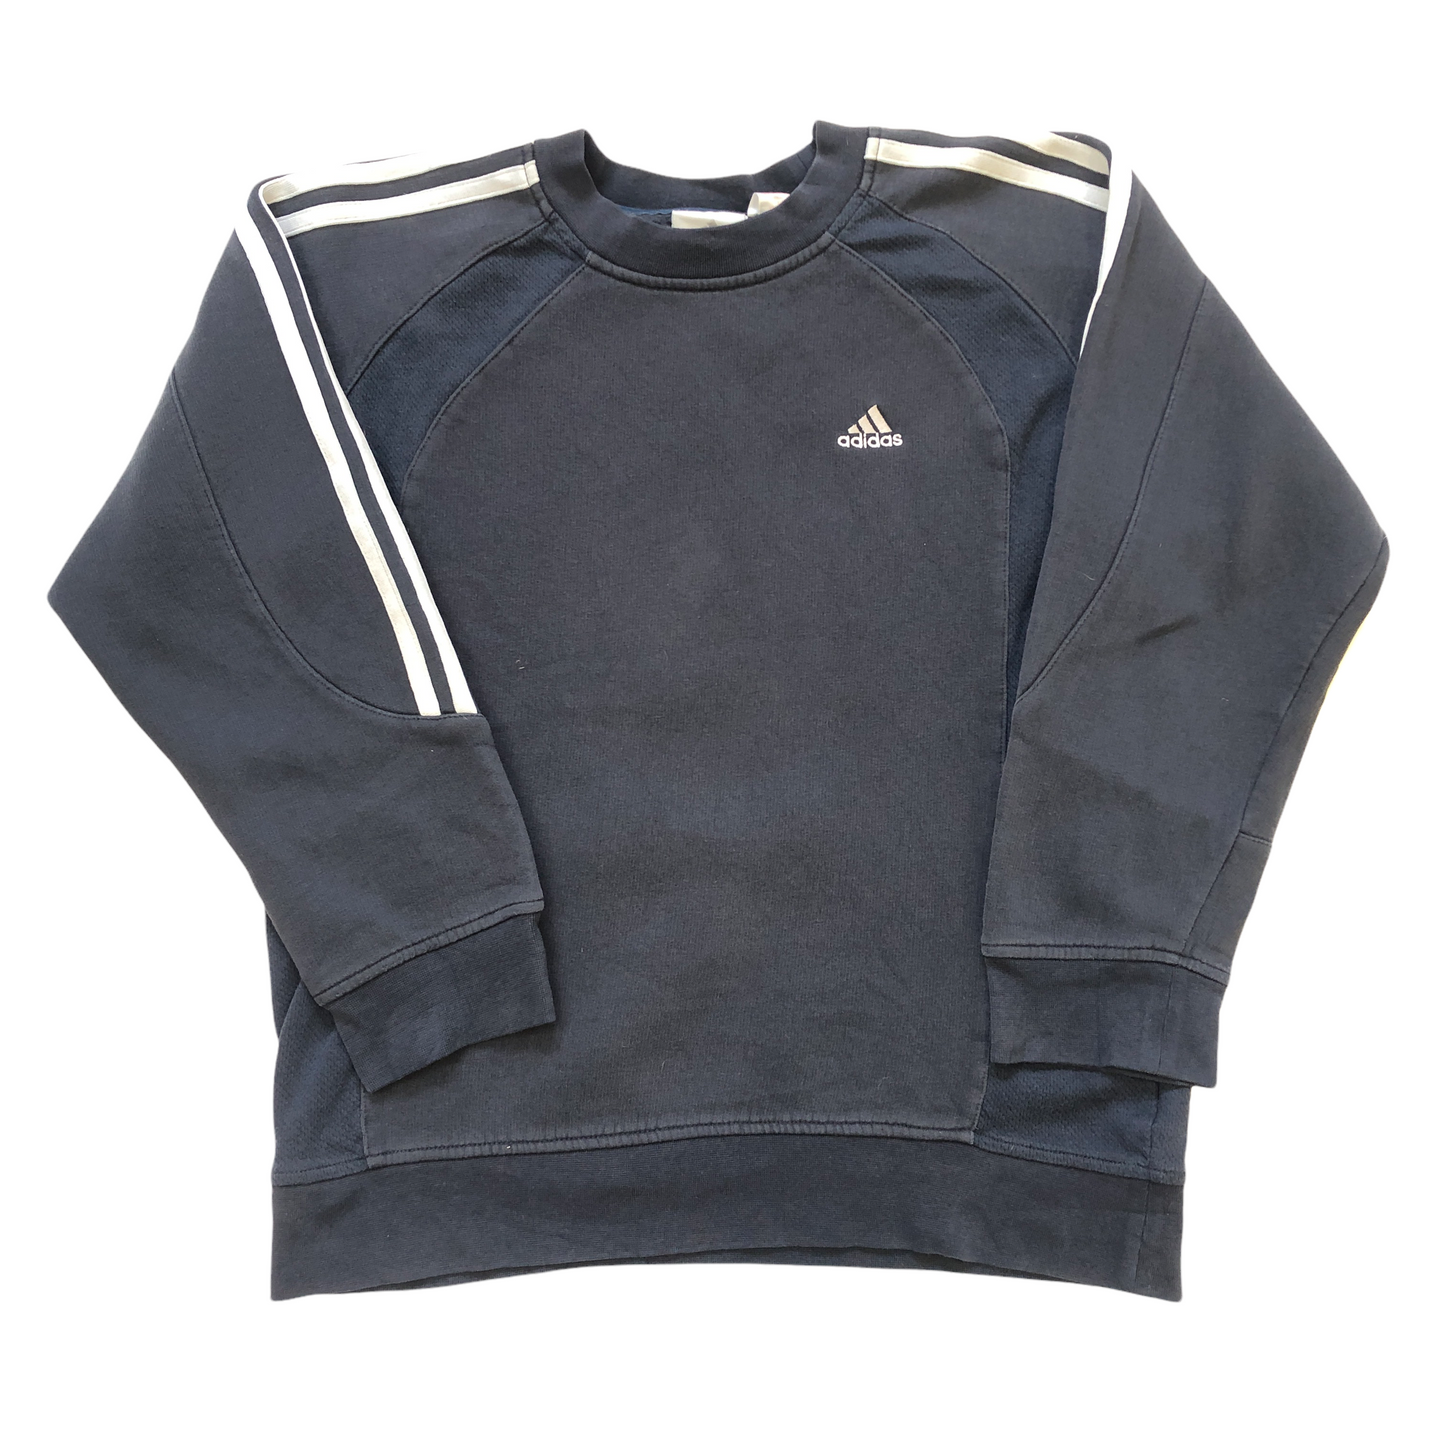 Vintage Adidas Sweatshirt (14yrs)